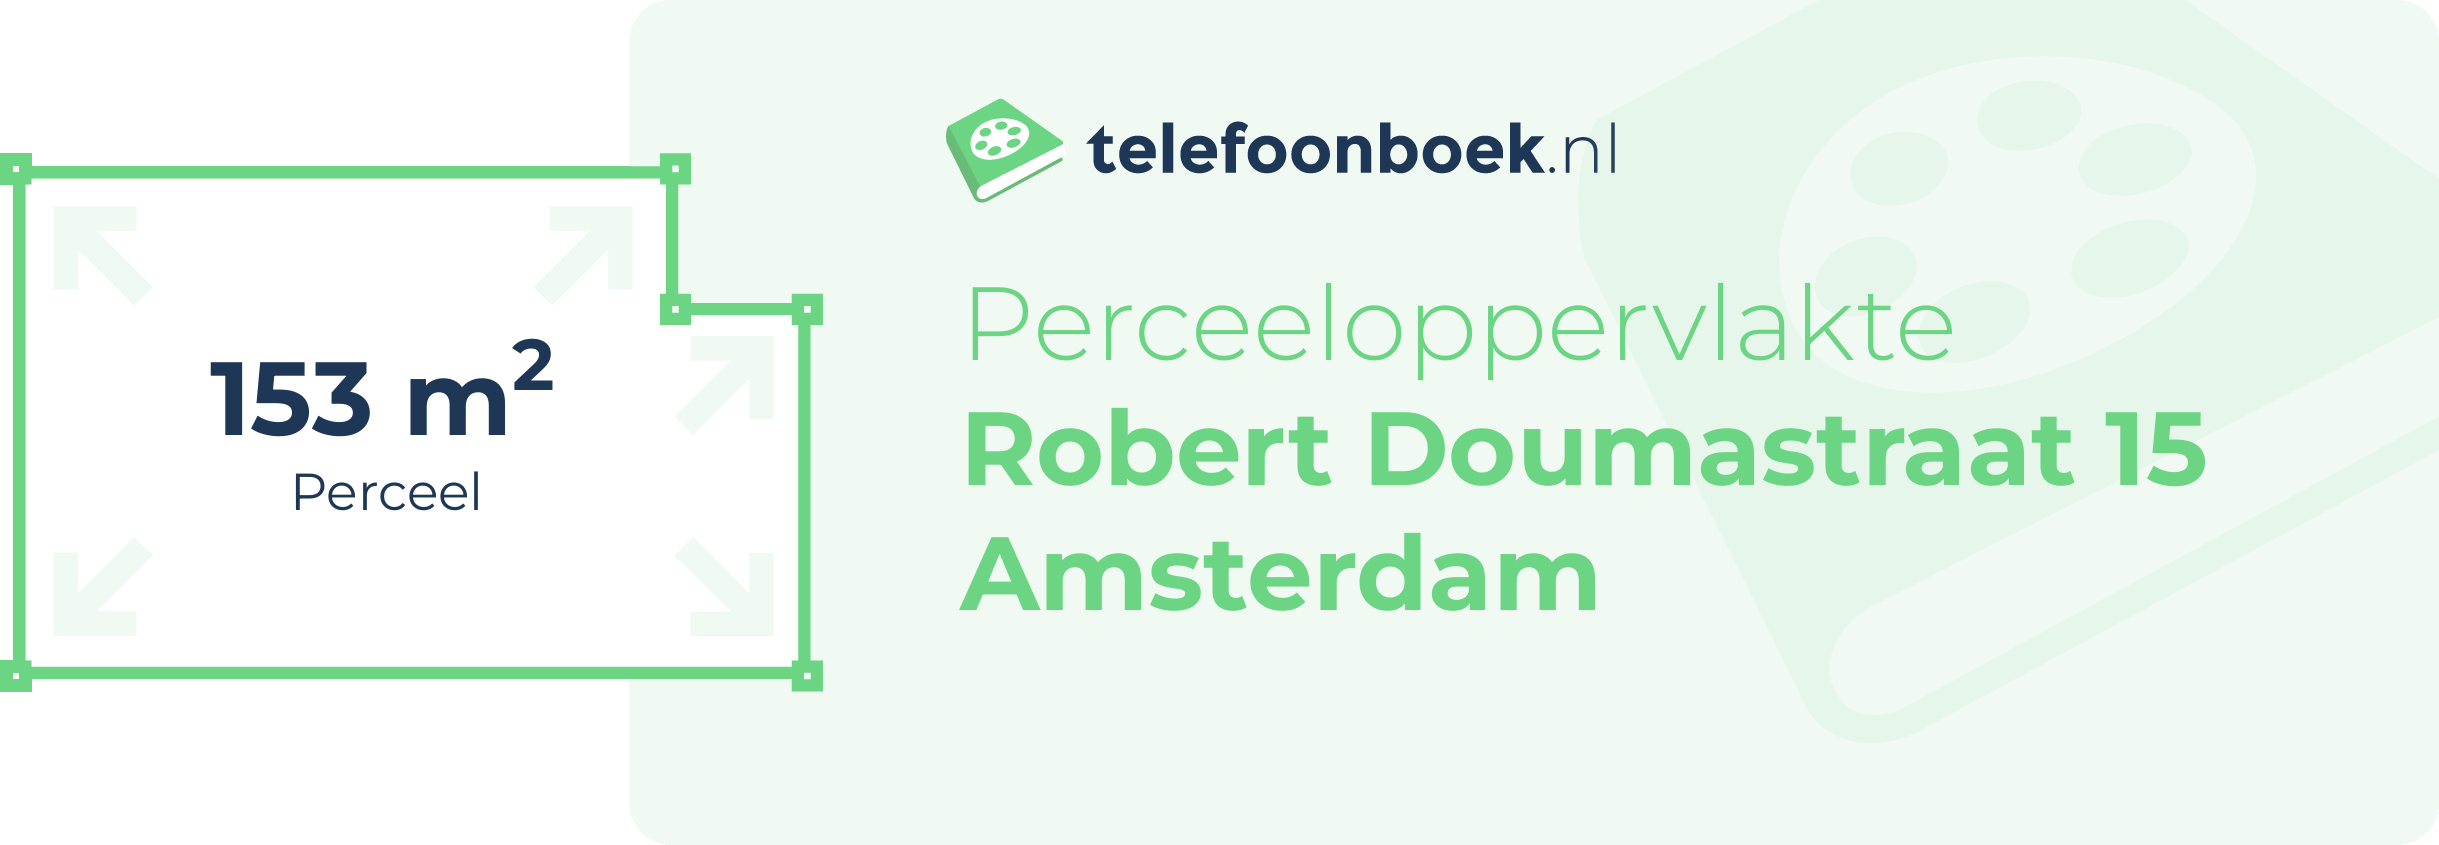 Perceeloppervlakte Robert Doumastraat 15 Amsterdam